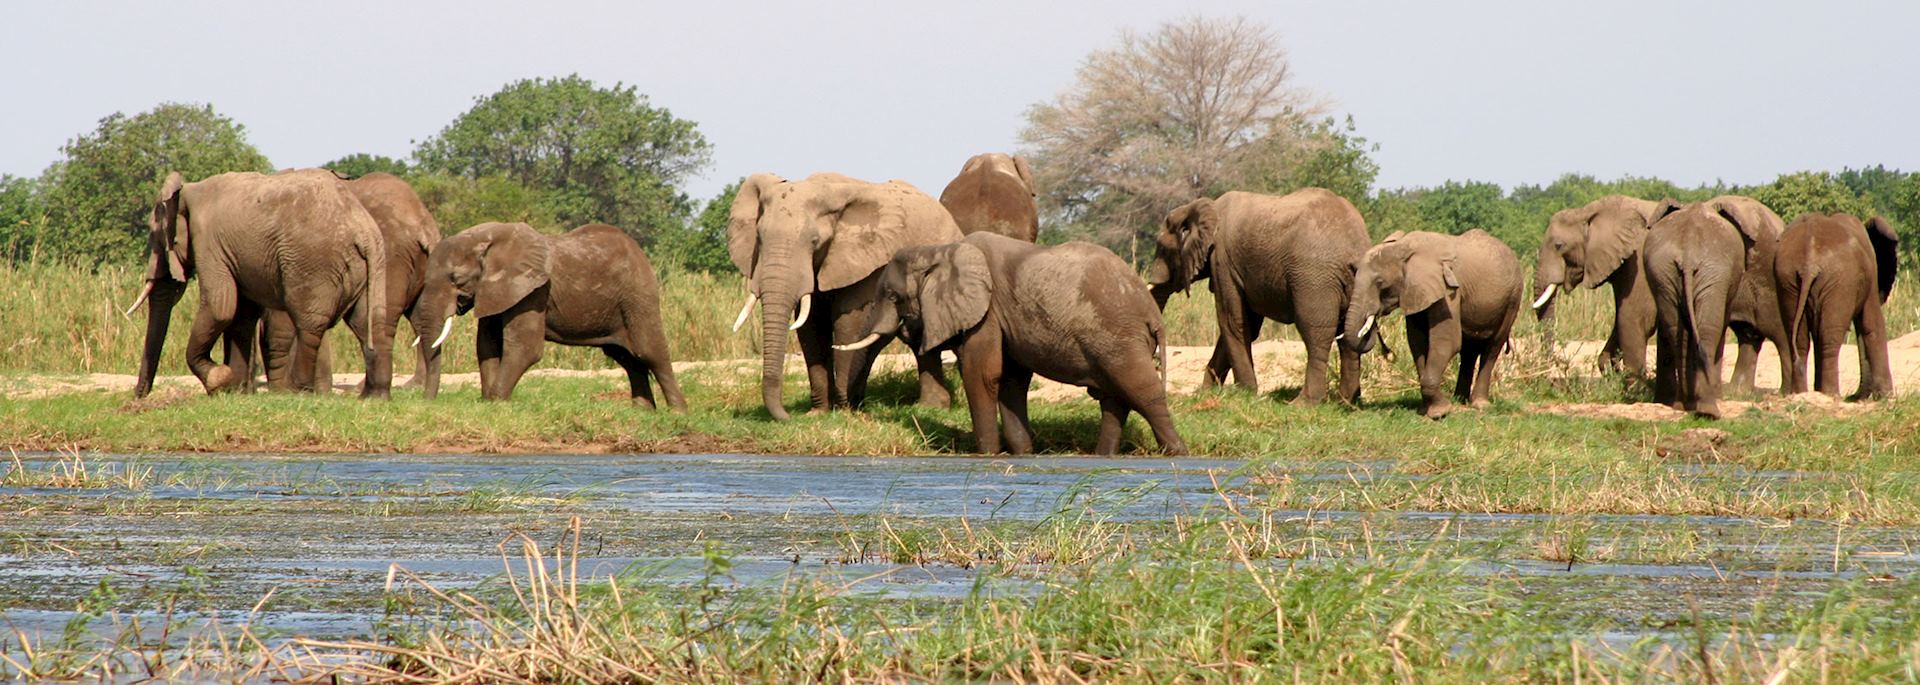 Elephants in Lower Zambezi National Park